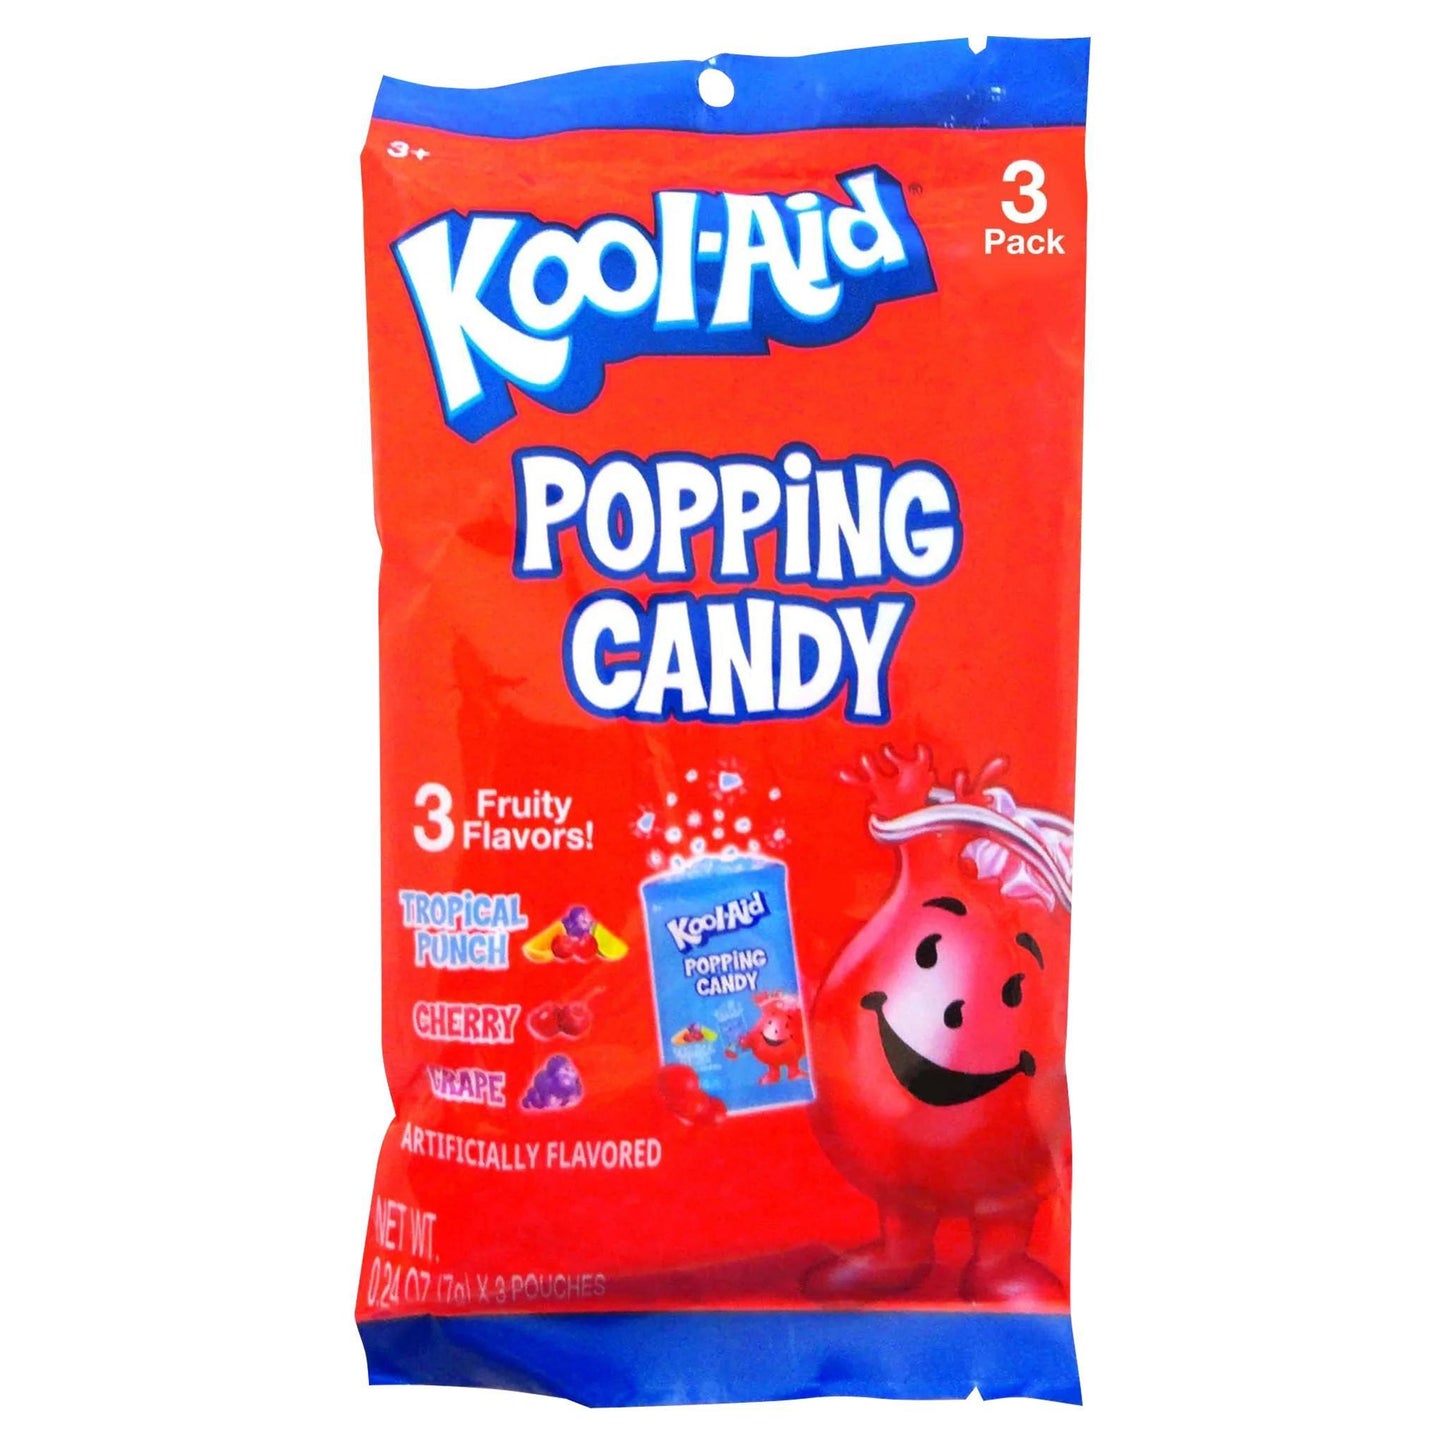 Kool-Aid Popping Candy Bag